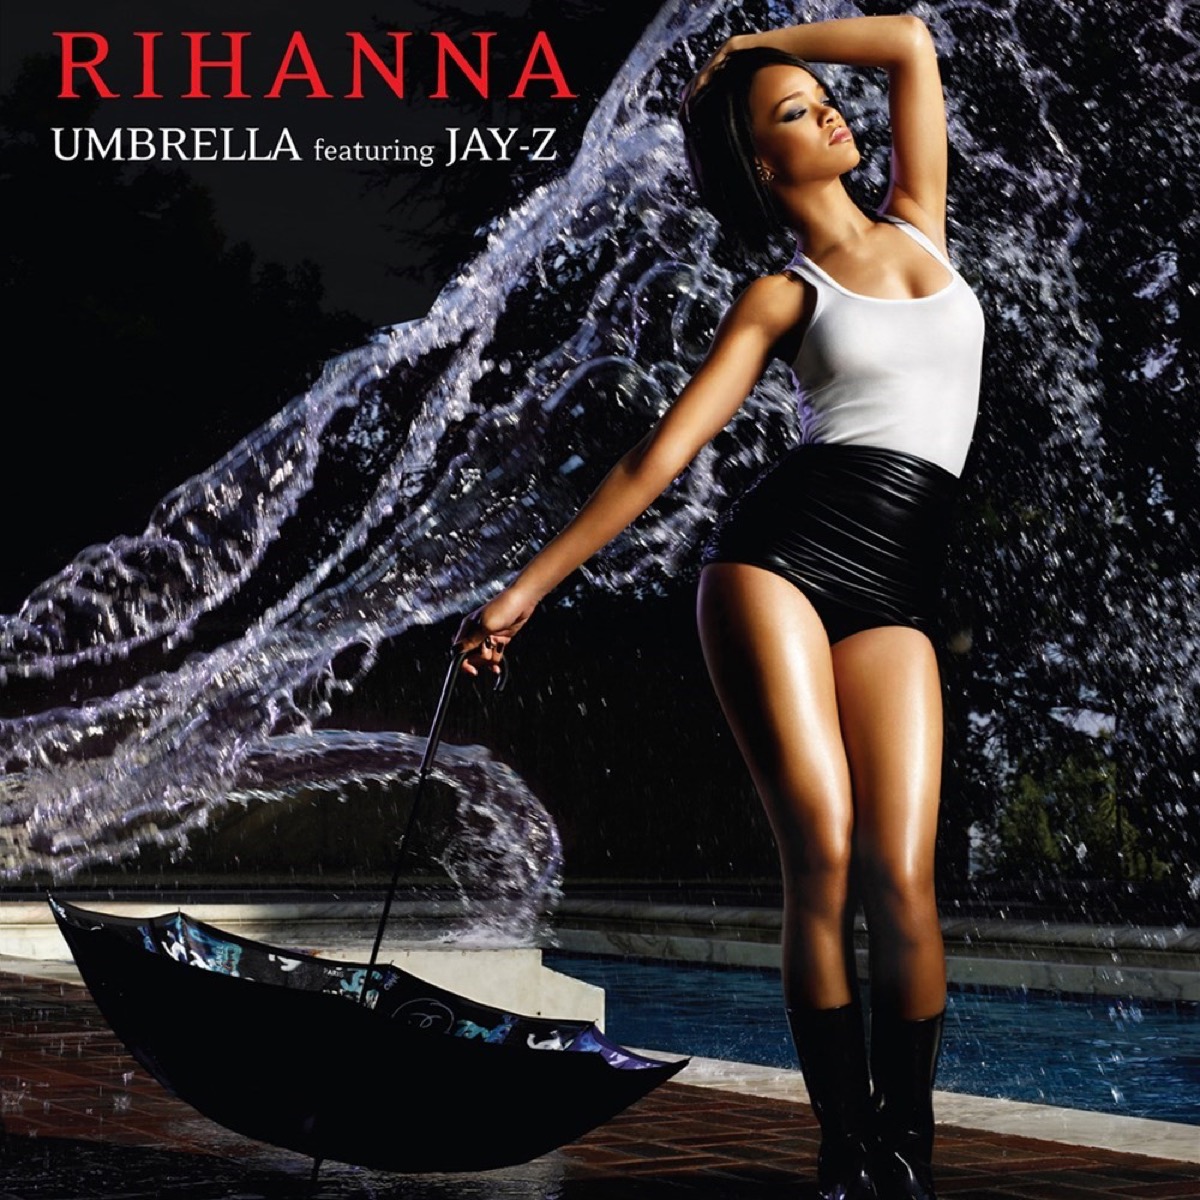 Rihanna "Umbrella" single cover